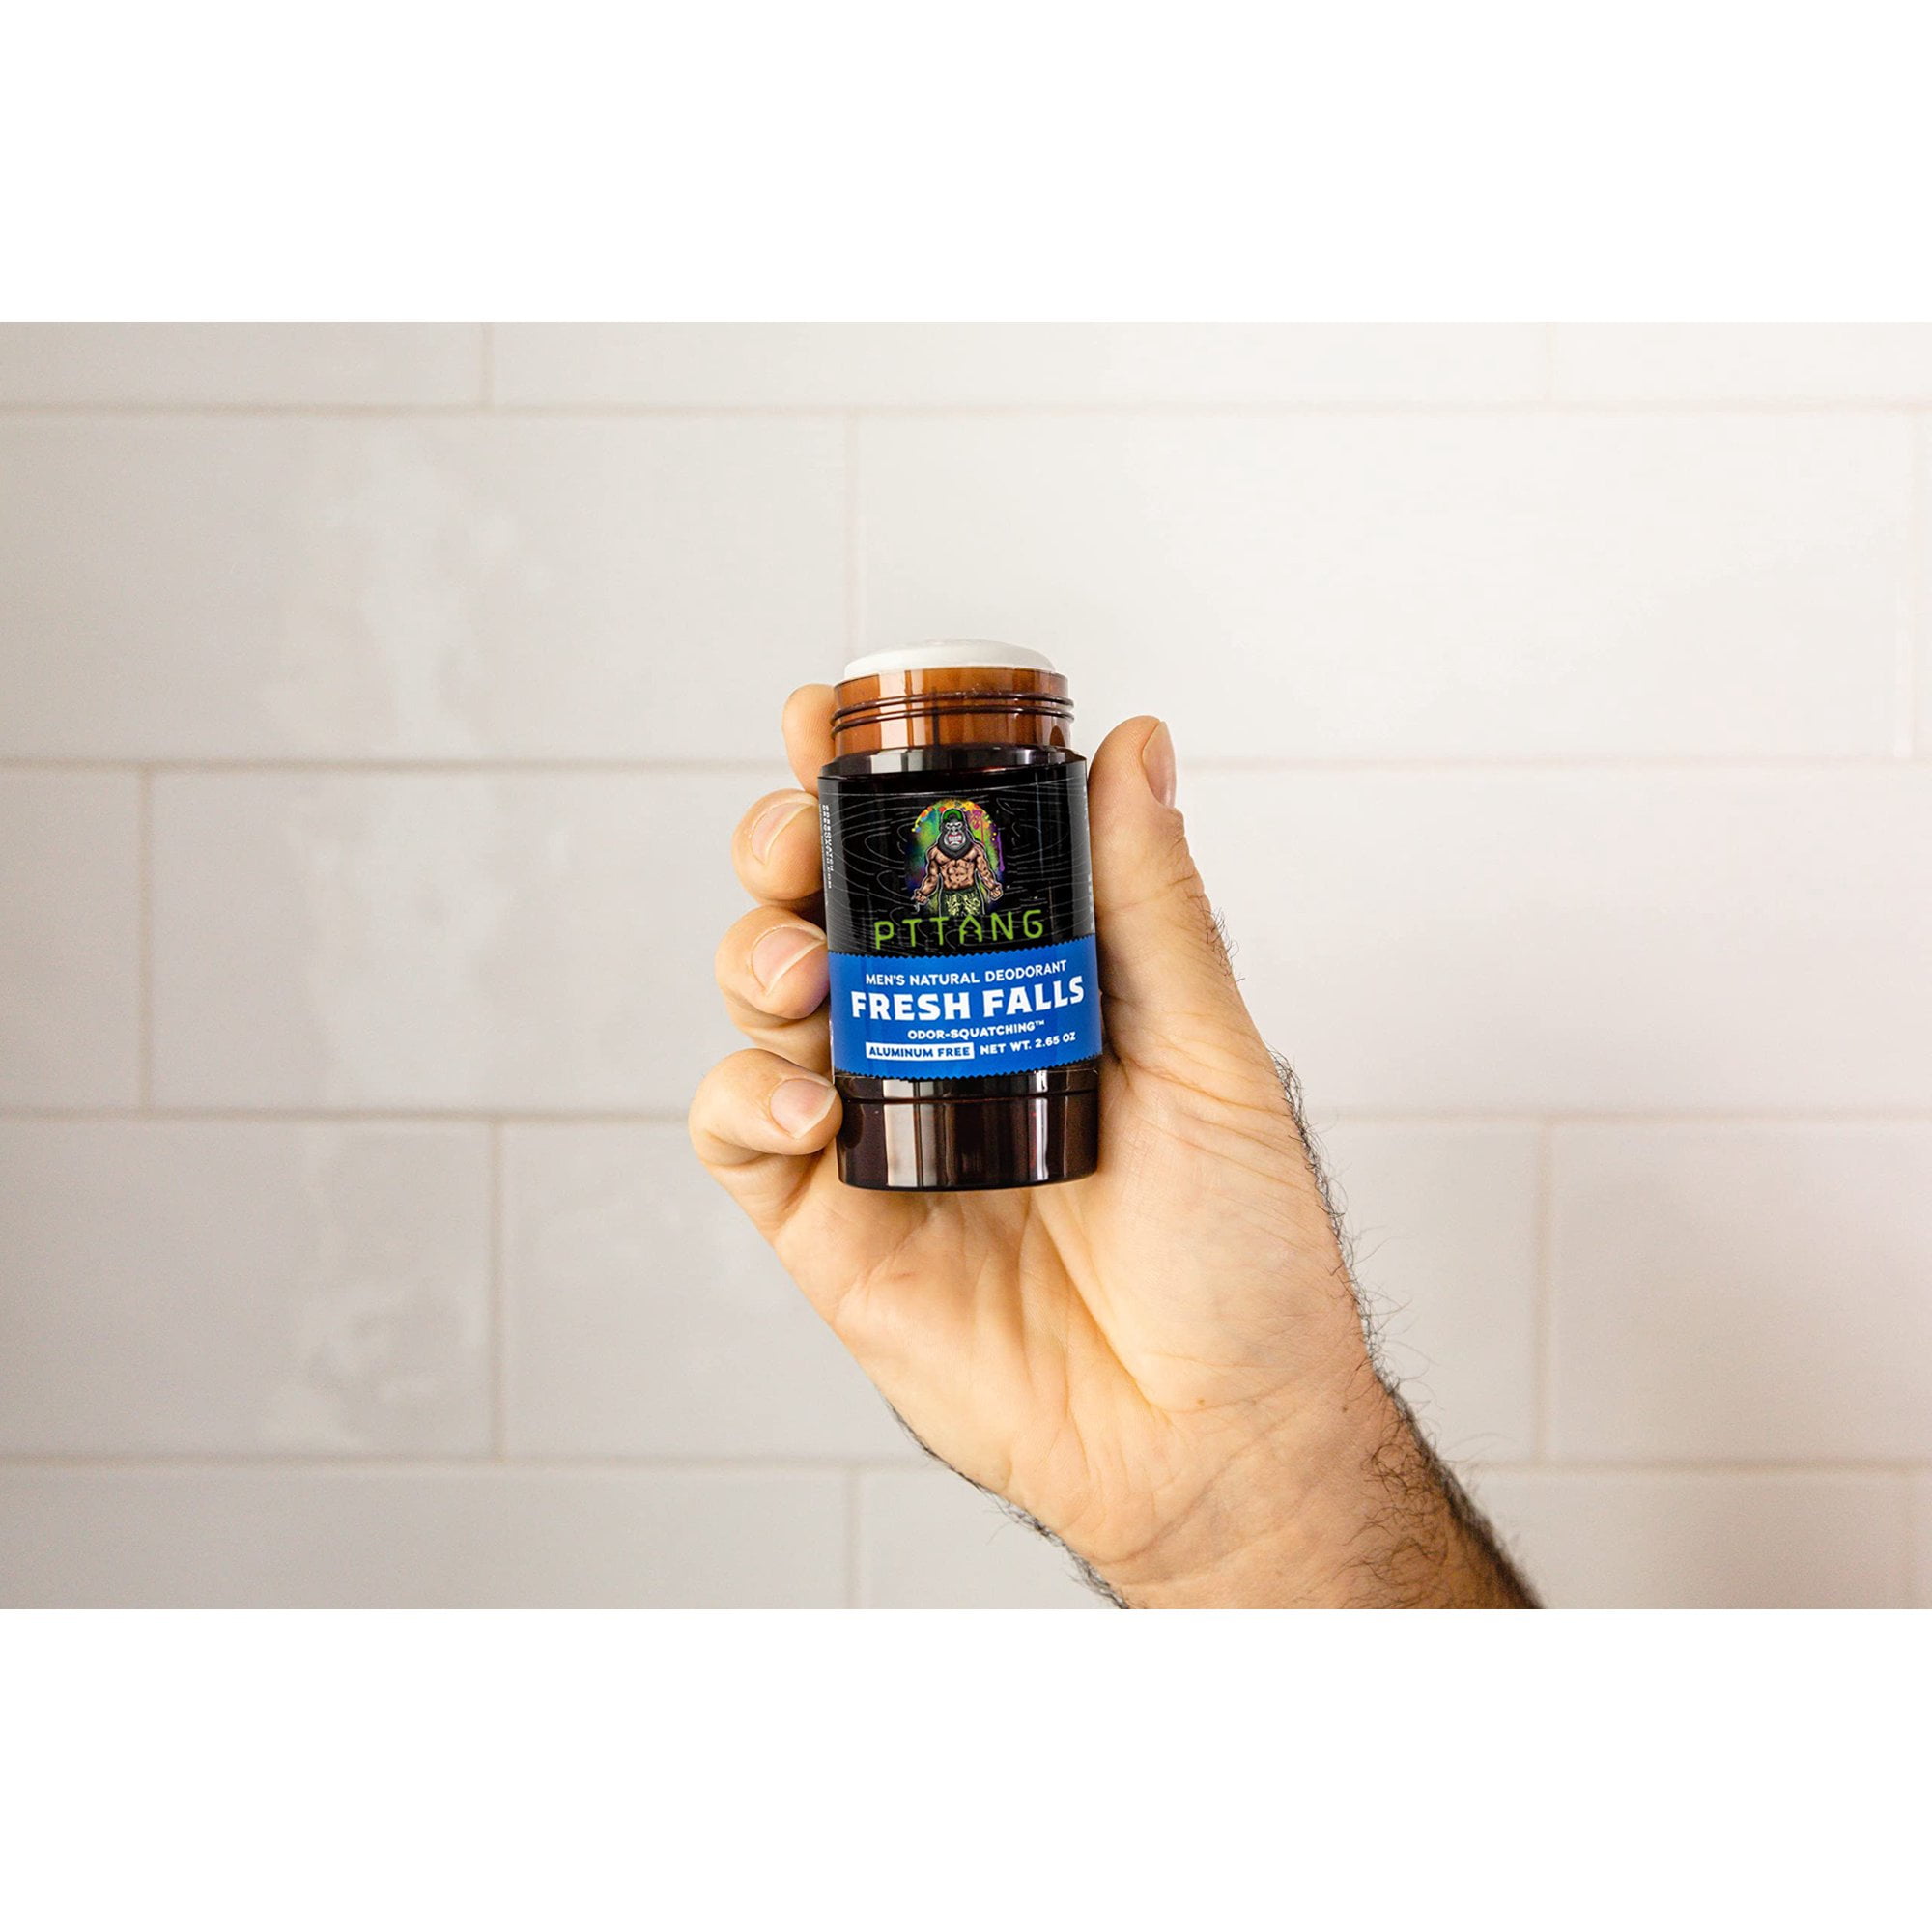 Dr. Squatch Natural Deodorant for Men – Odor-Squatching Men's